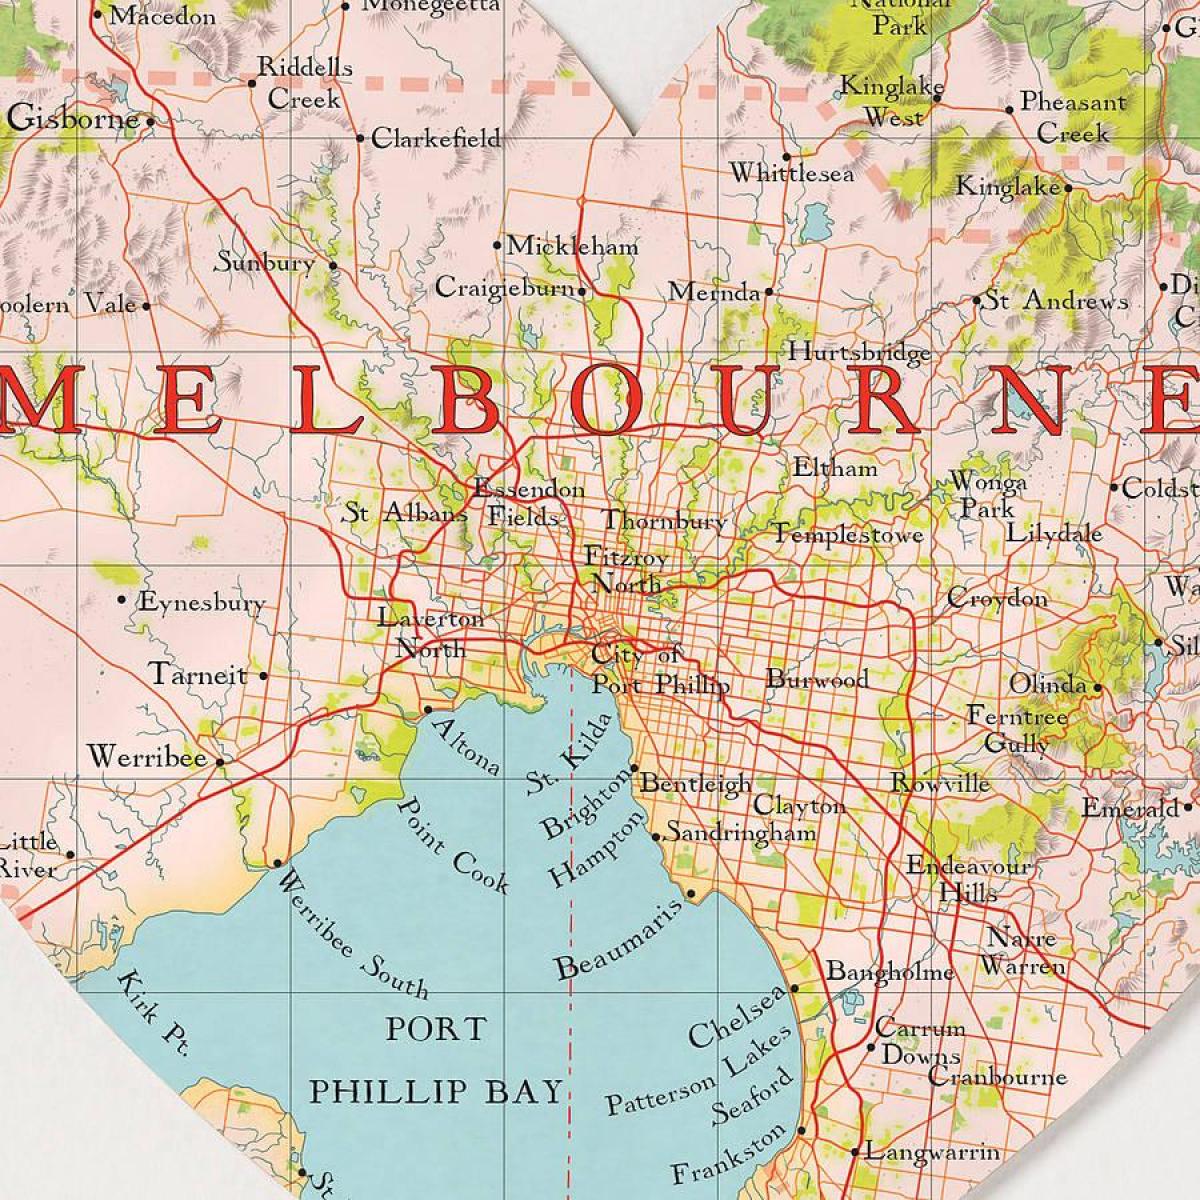 Melbourne harta lumii